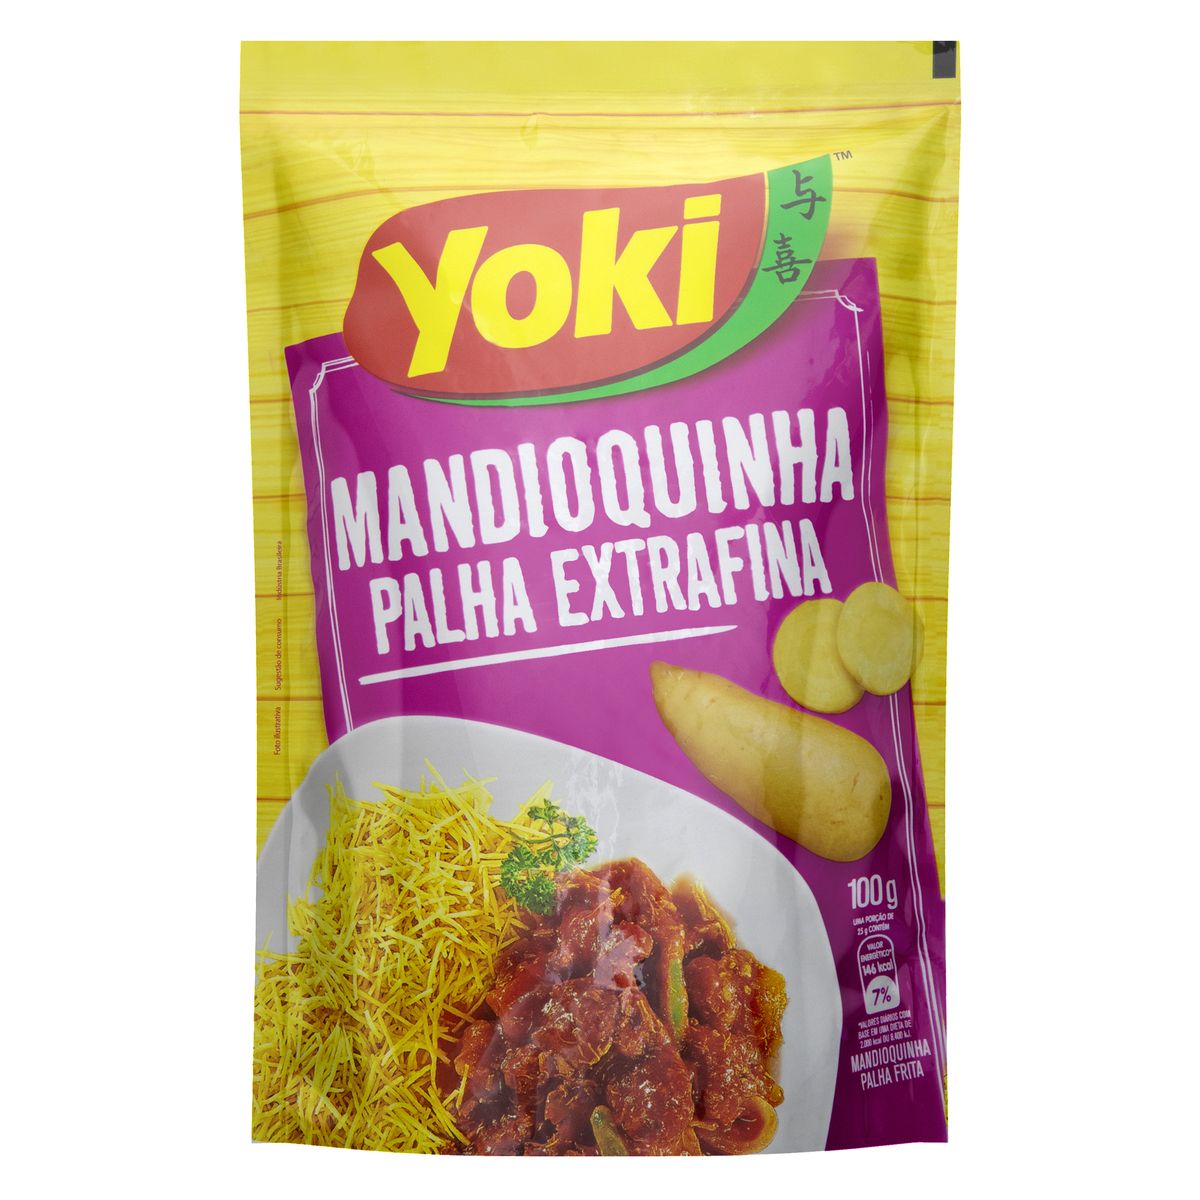 Mandioquinha Palha Extrafina Yoki Pacote 100g